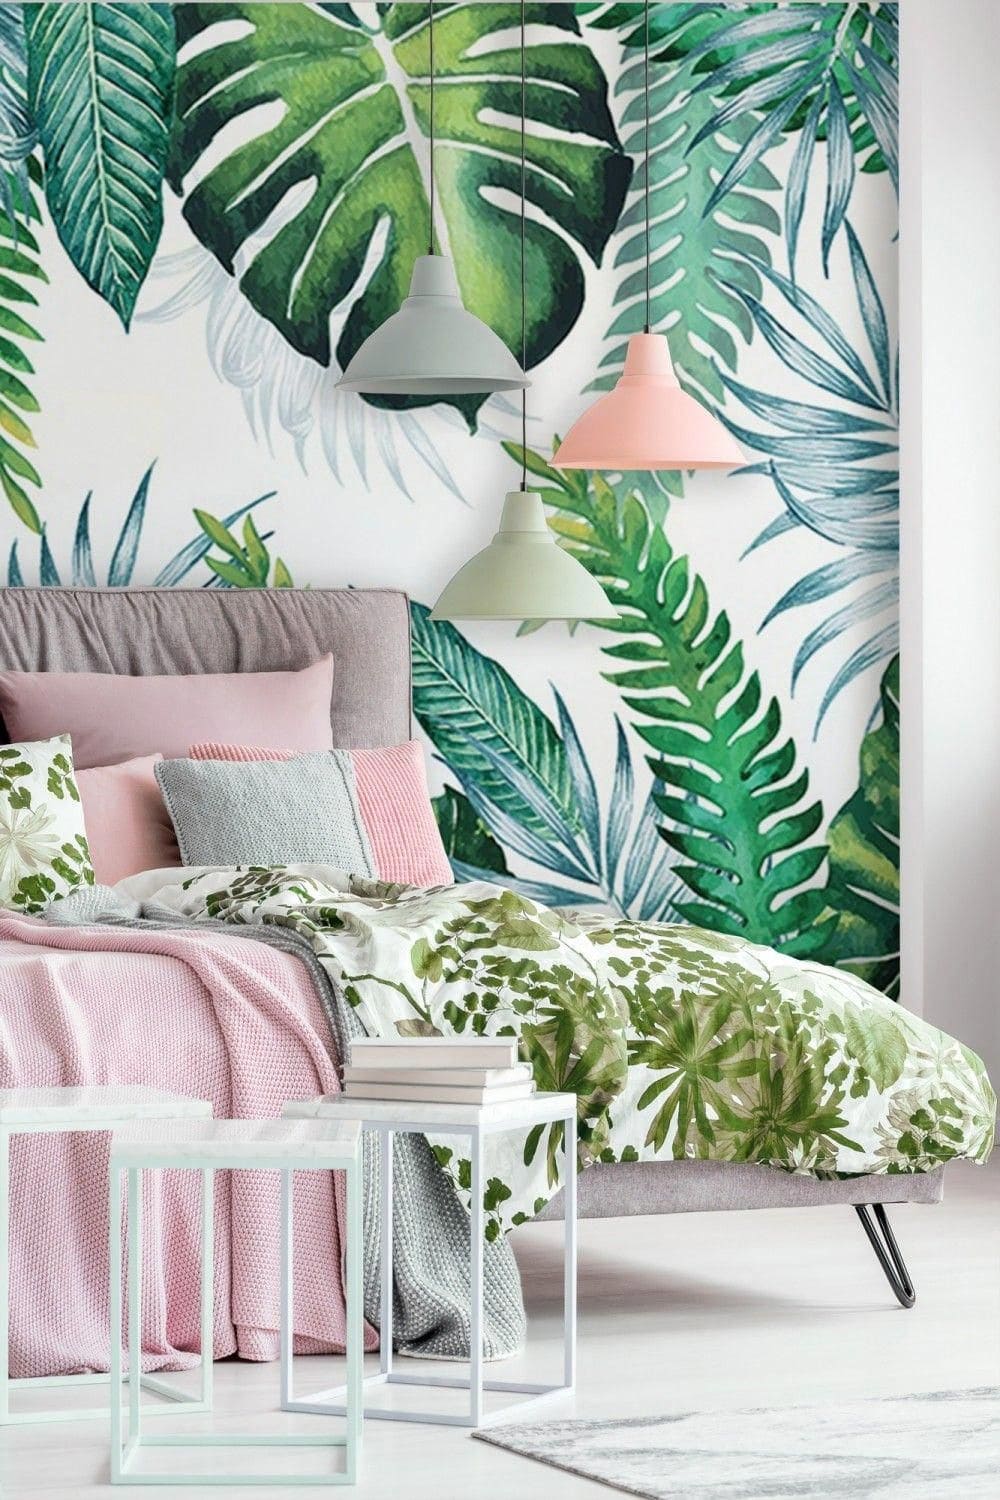 26 stunningly beautiful tropical home decor ideas - 75